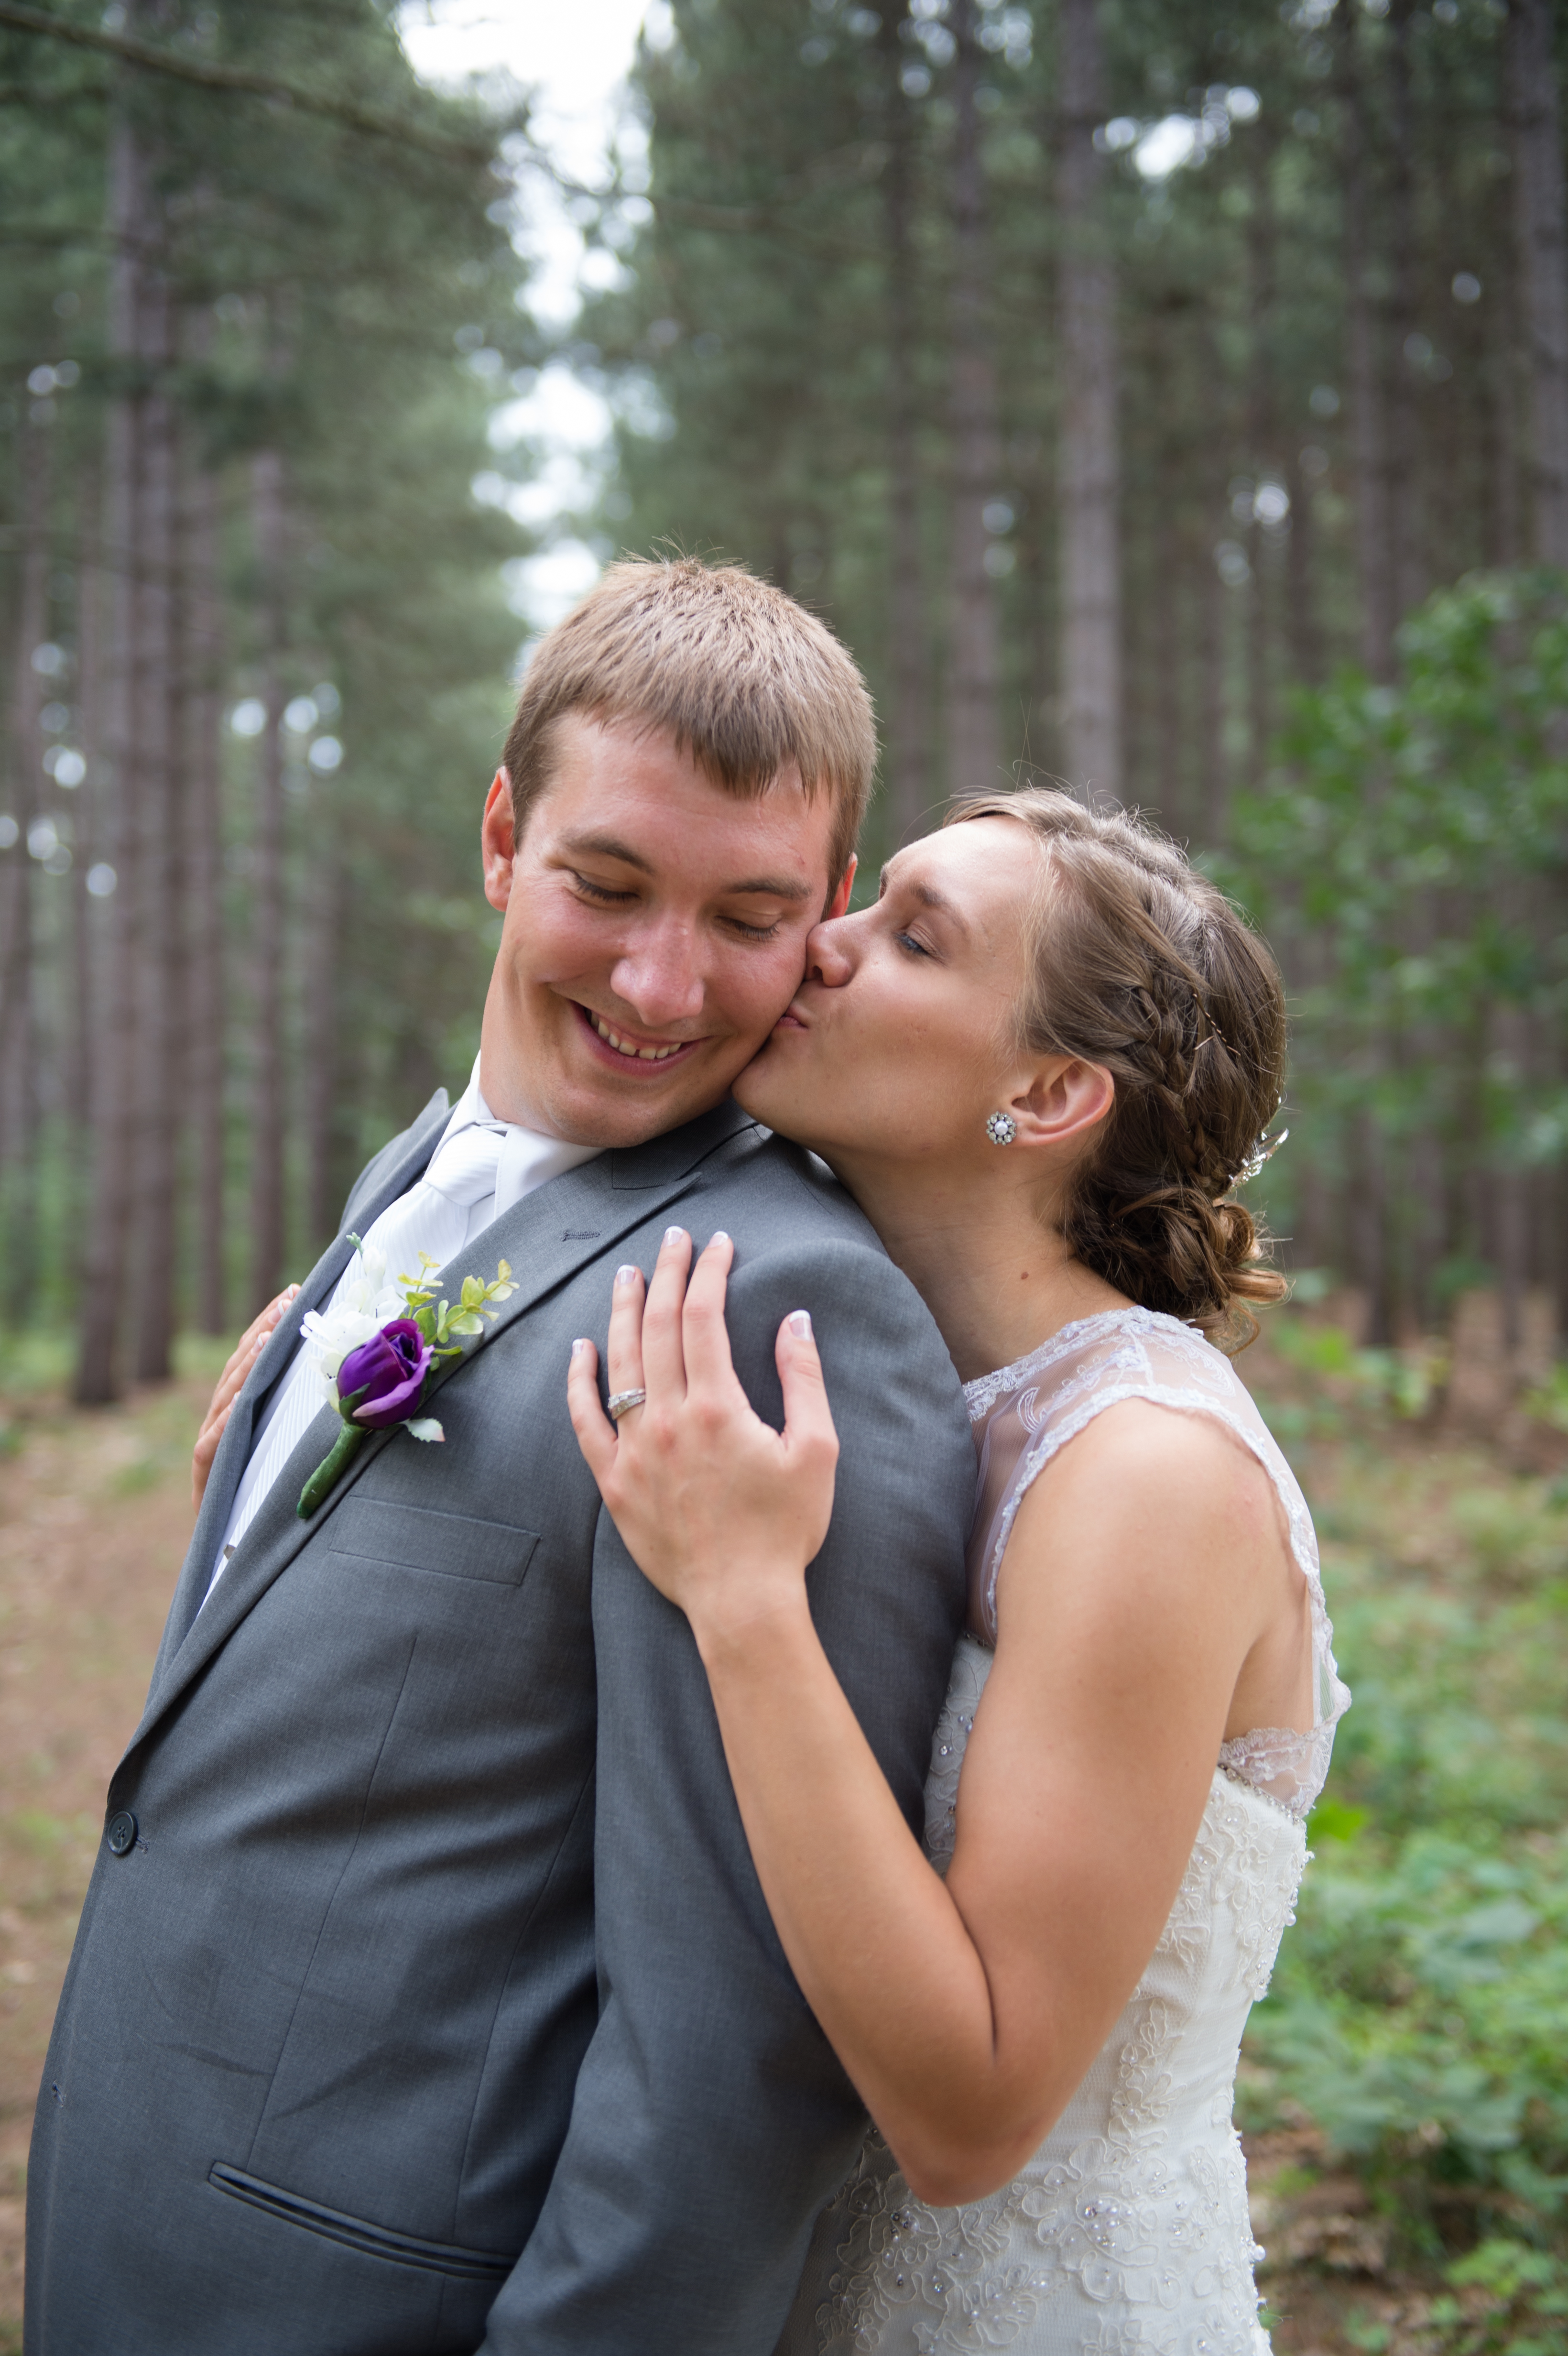 Ben & Caitlin – Montello Wisconsin, Country Wedding Photography